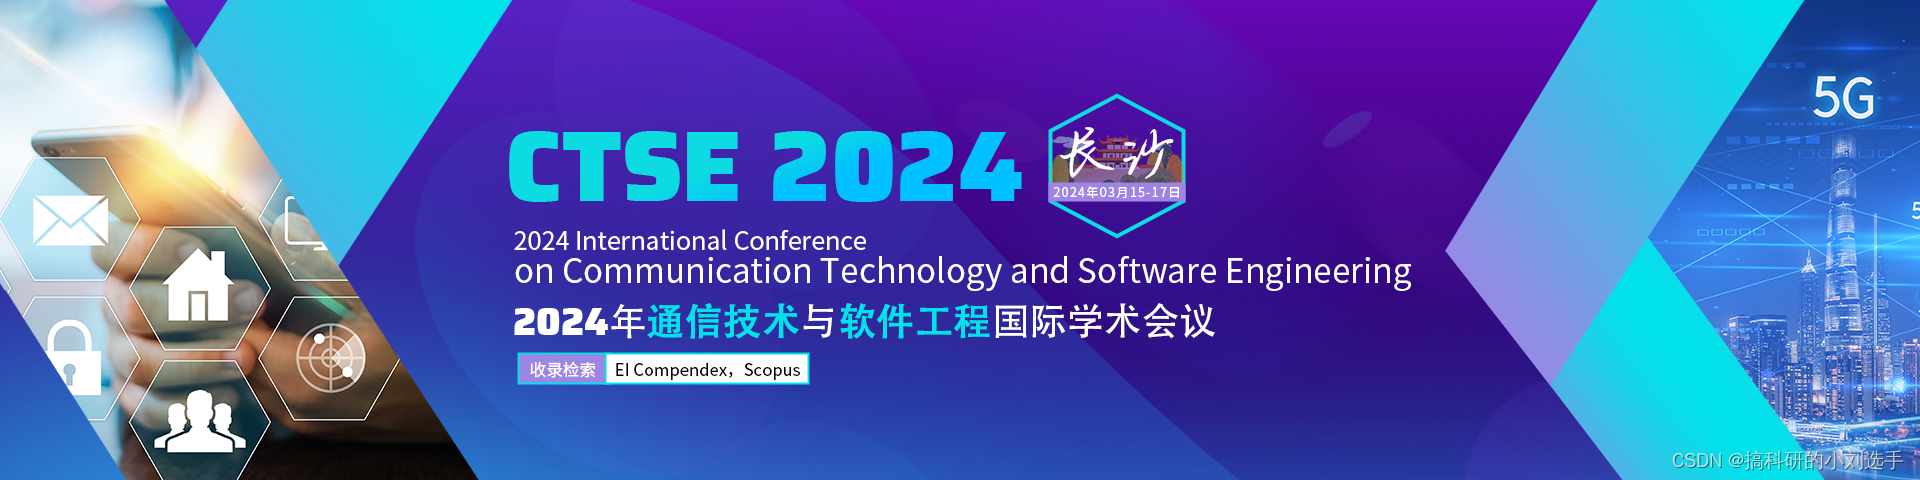 【EI会议征稿通知】2024年通信技术与软件工程国际学术会议 (CTSE 2024)